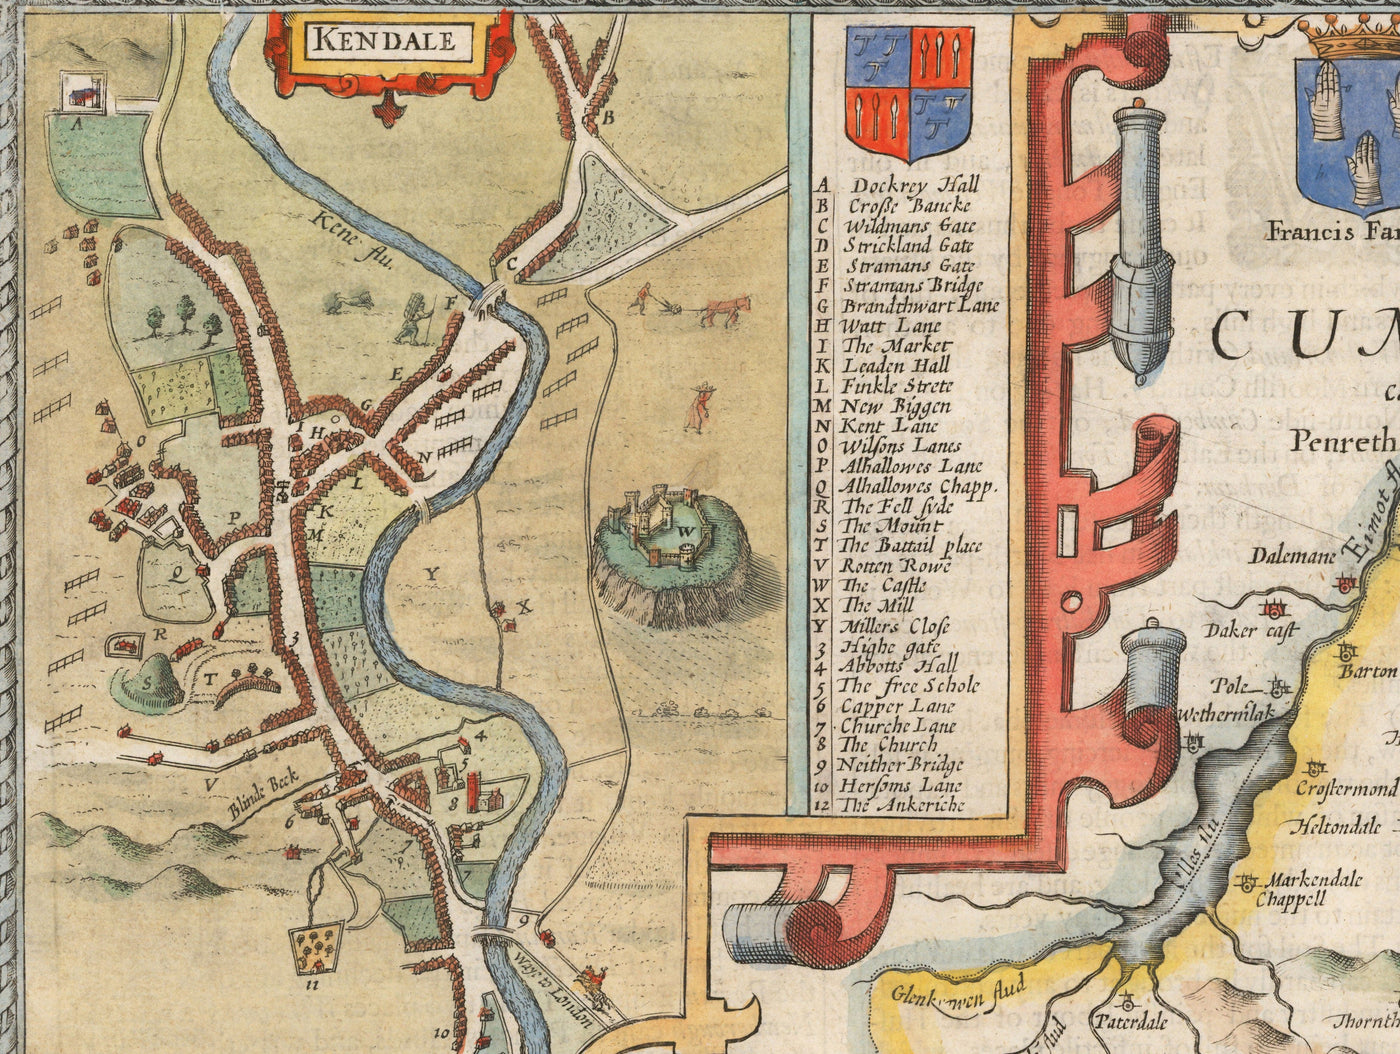 Viejo Mapa de Westmorland, 1611 de John Speed ​​- Lake District, Cumbria, Kendal, Windermere, Grasmere